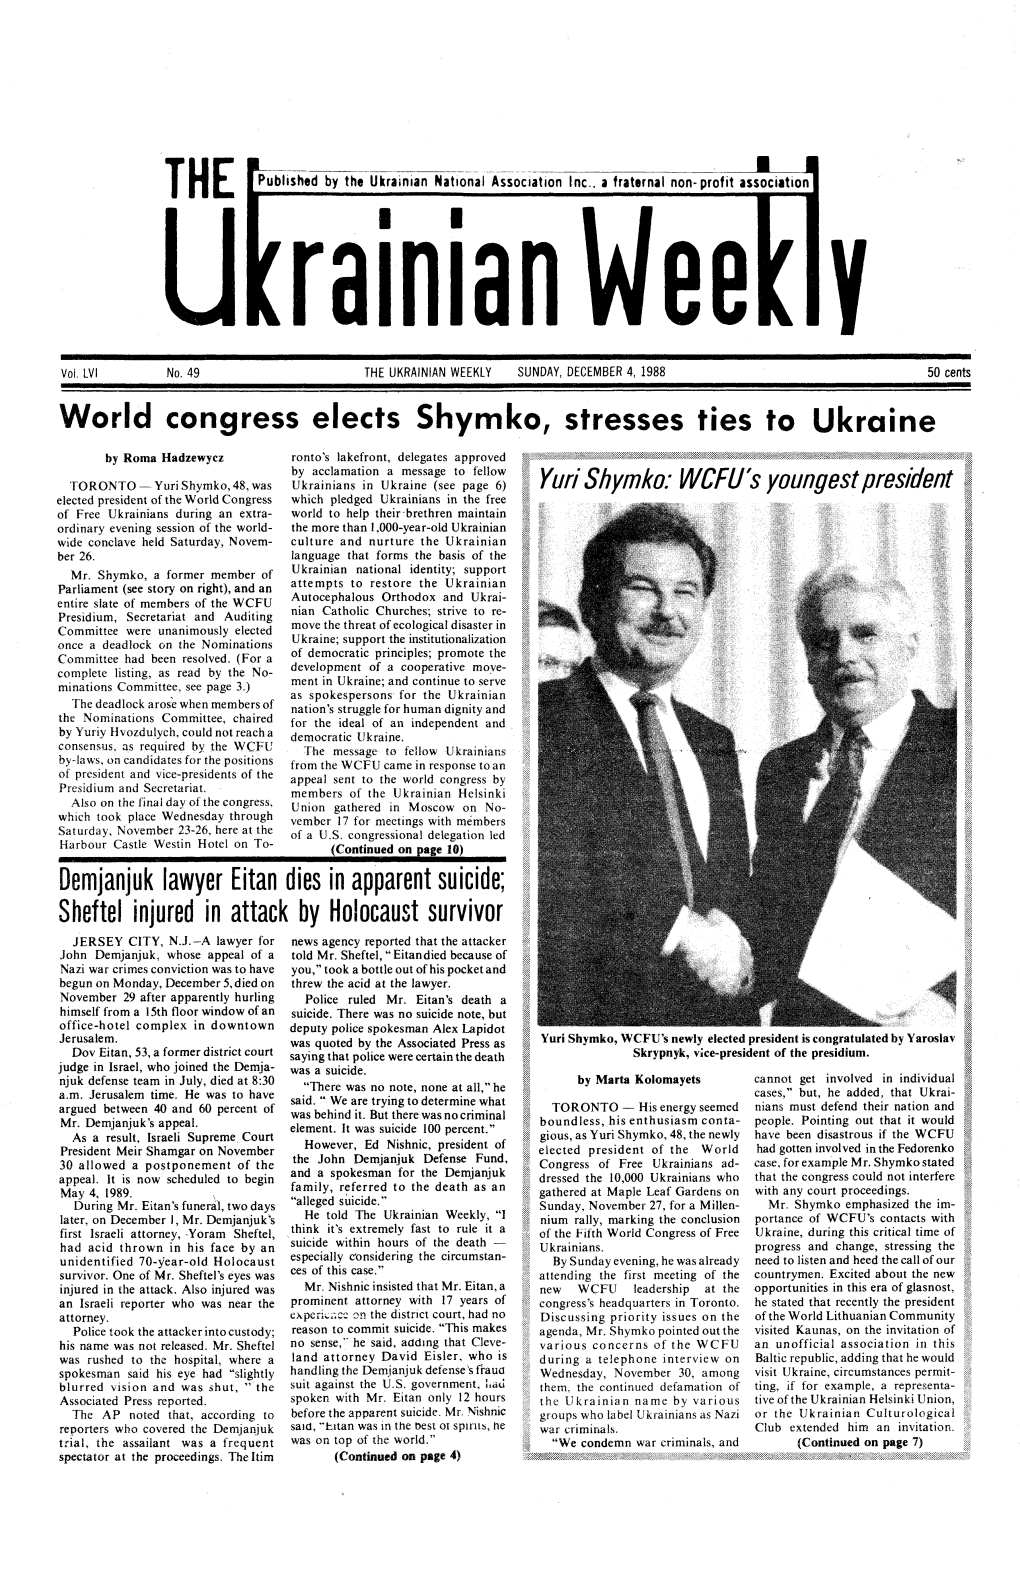 The Ukrainian Weekly 1988, No.49